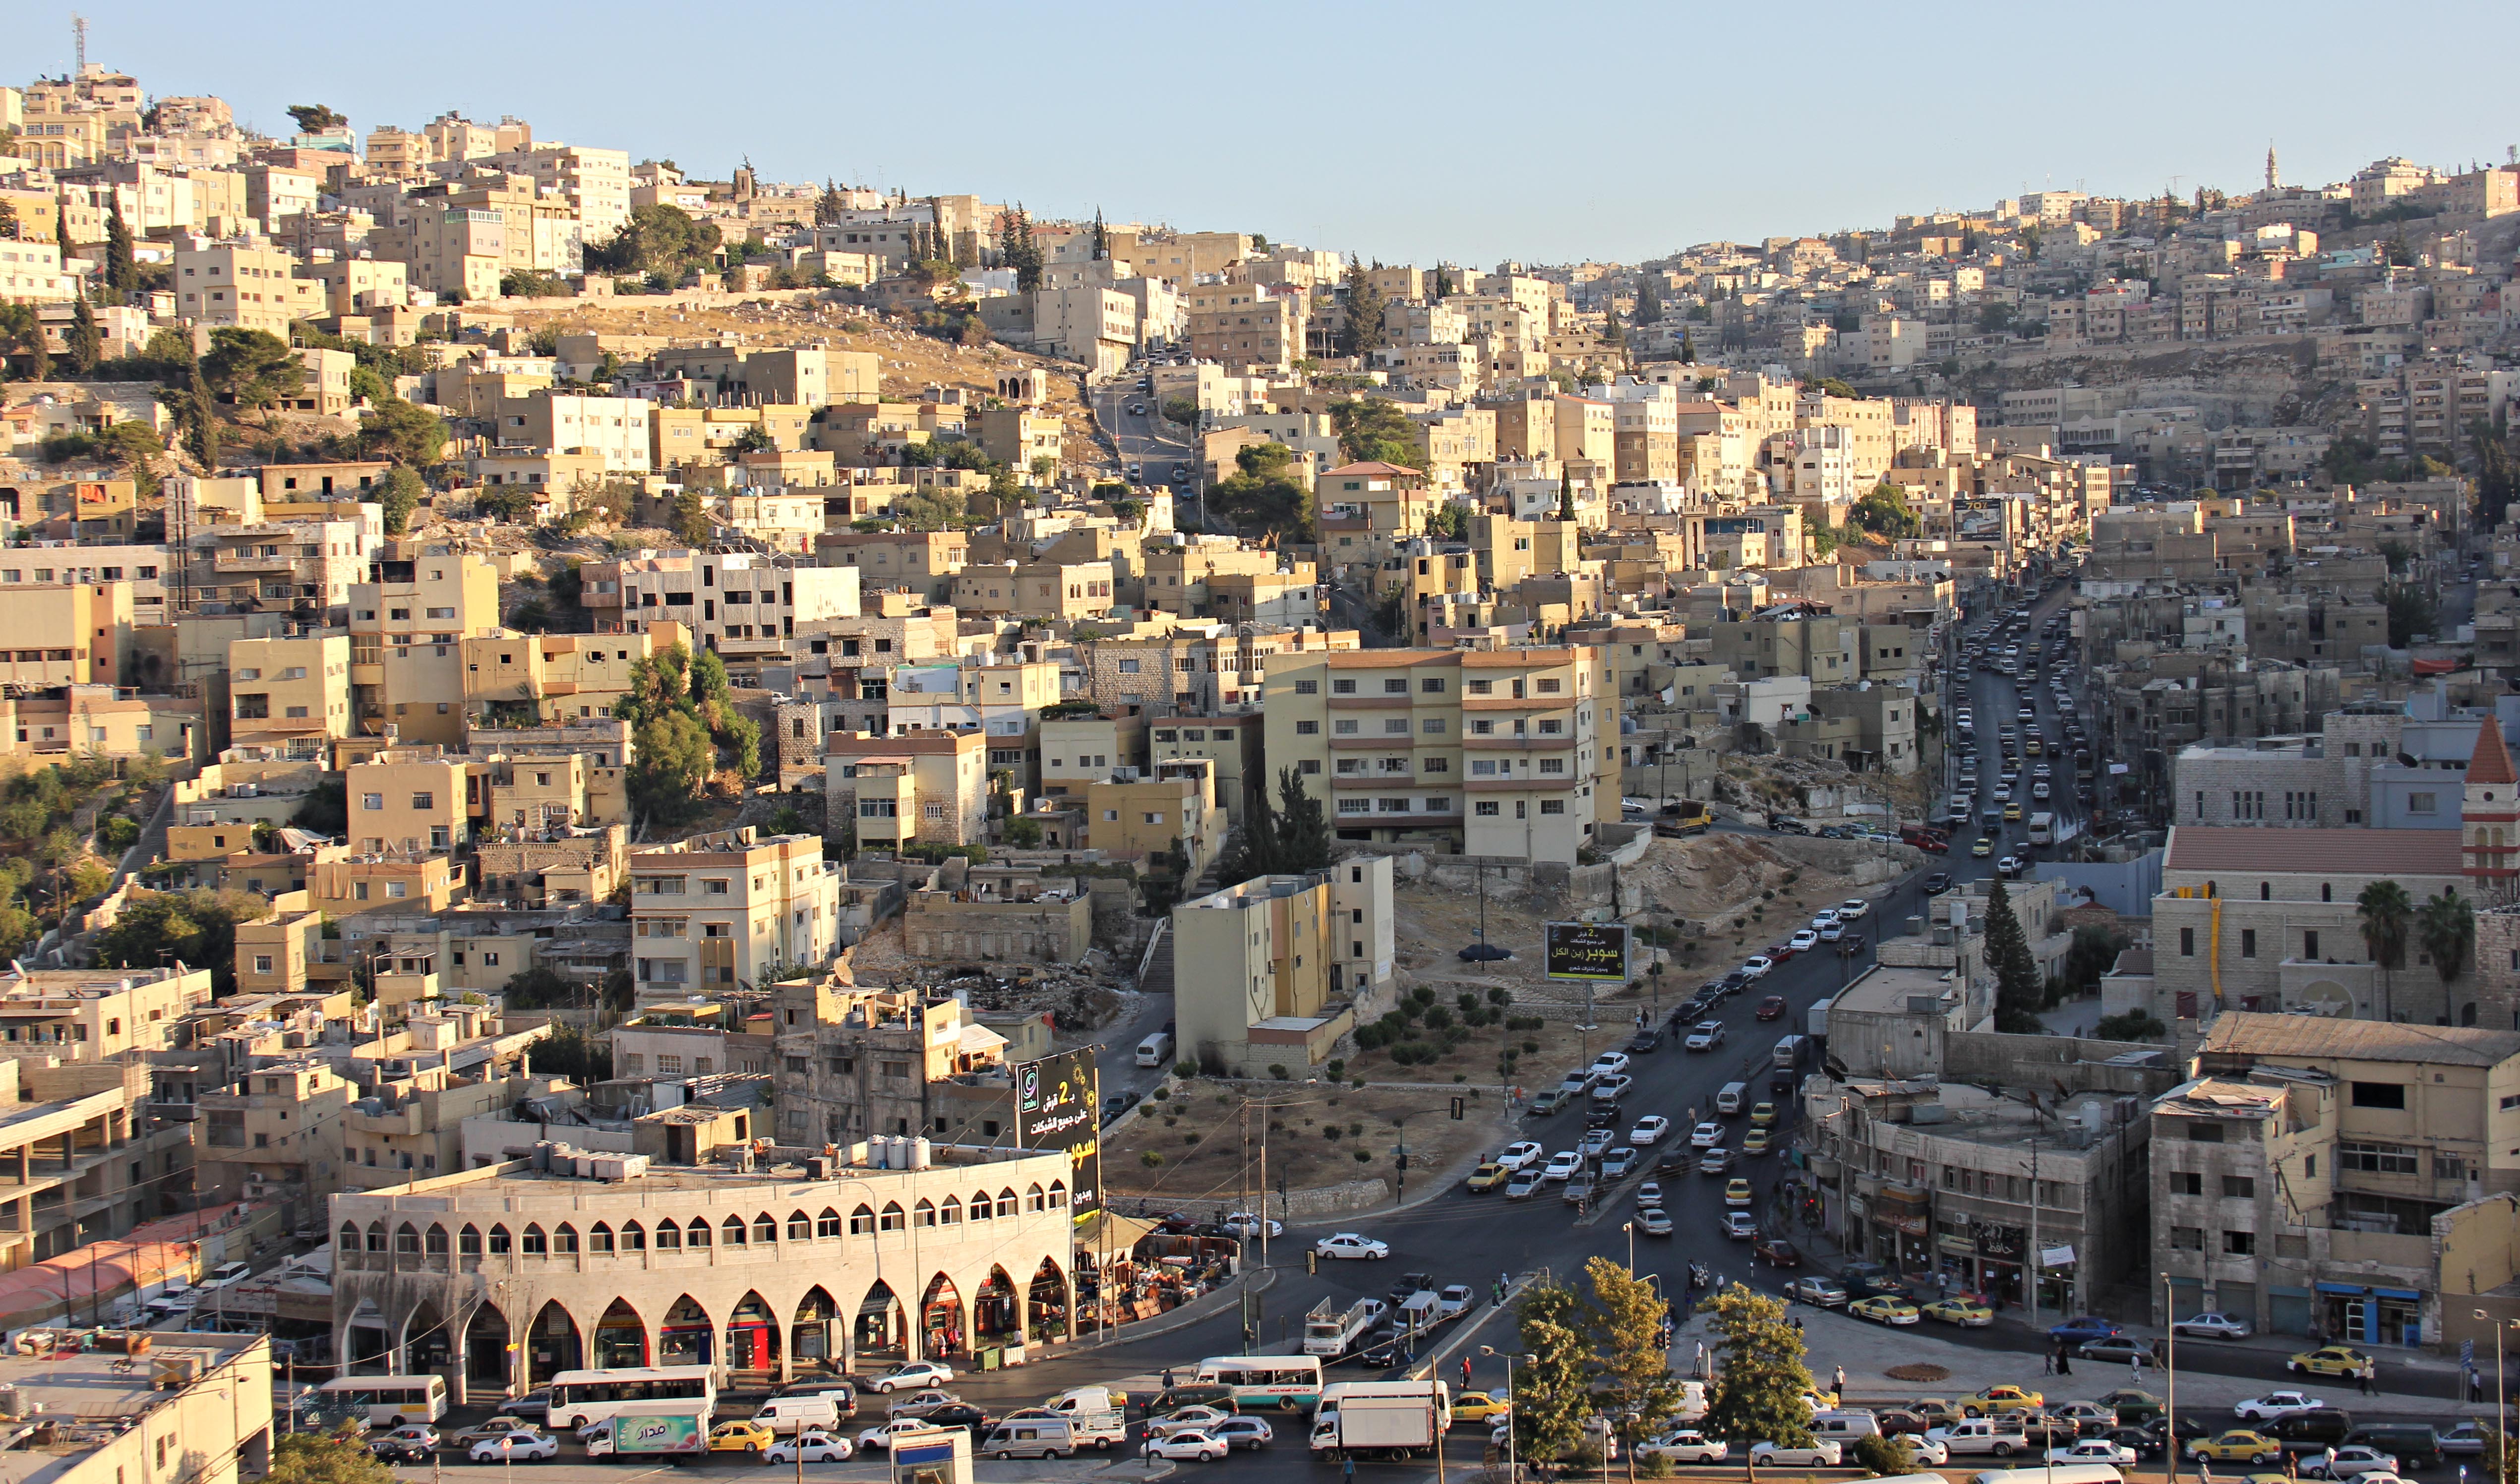 Panoramic view of Amman